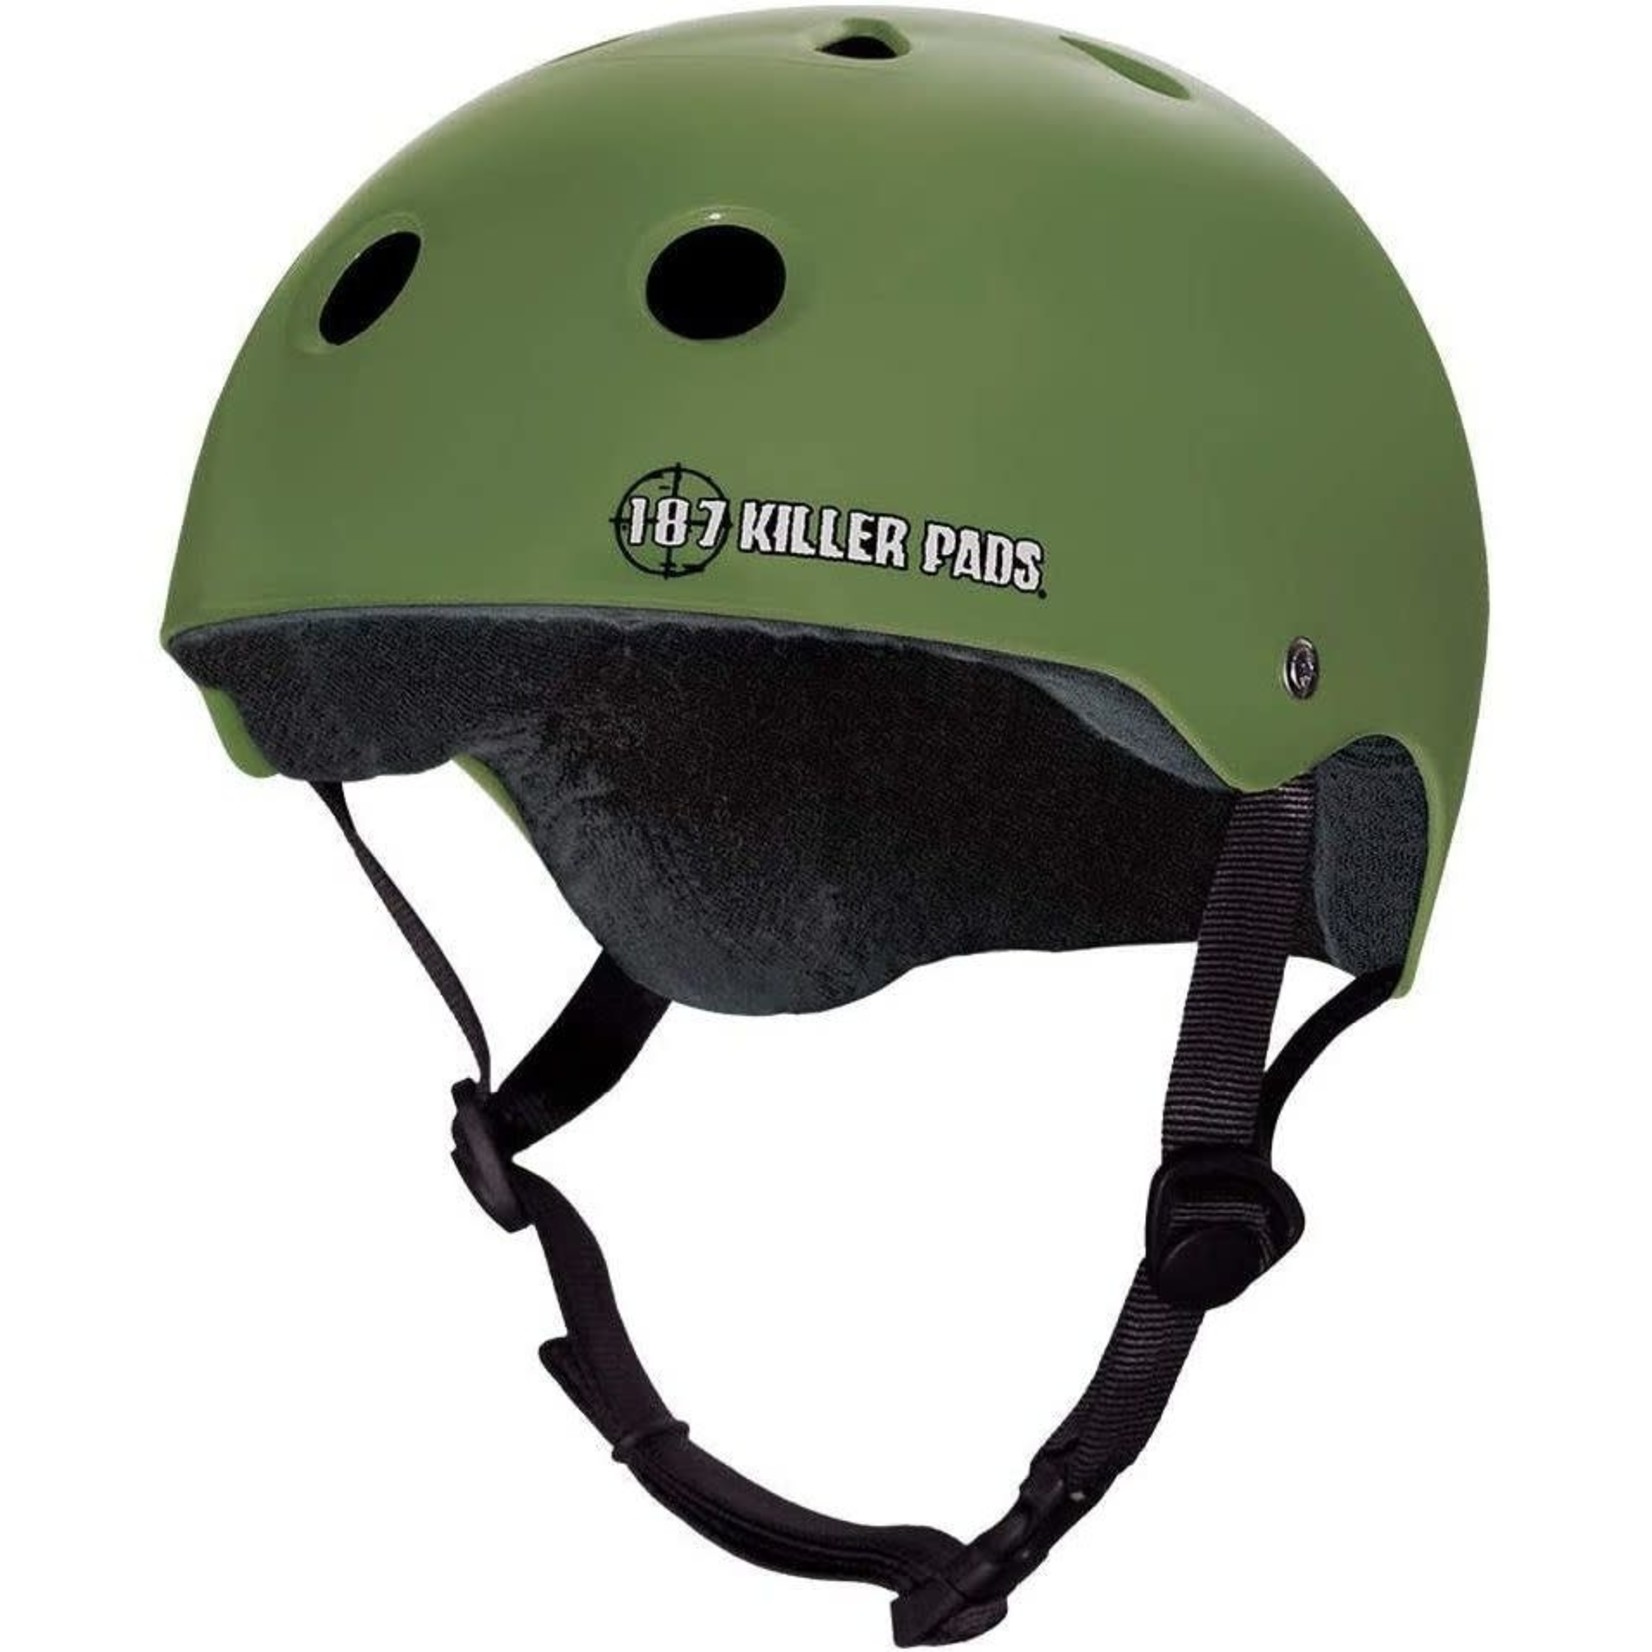 187 Killer Pads 187 Killer Pads Pro Helmet Sweatsaver Liner Matte Army Green -